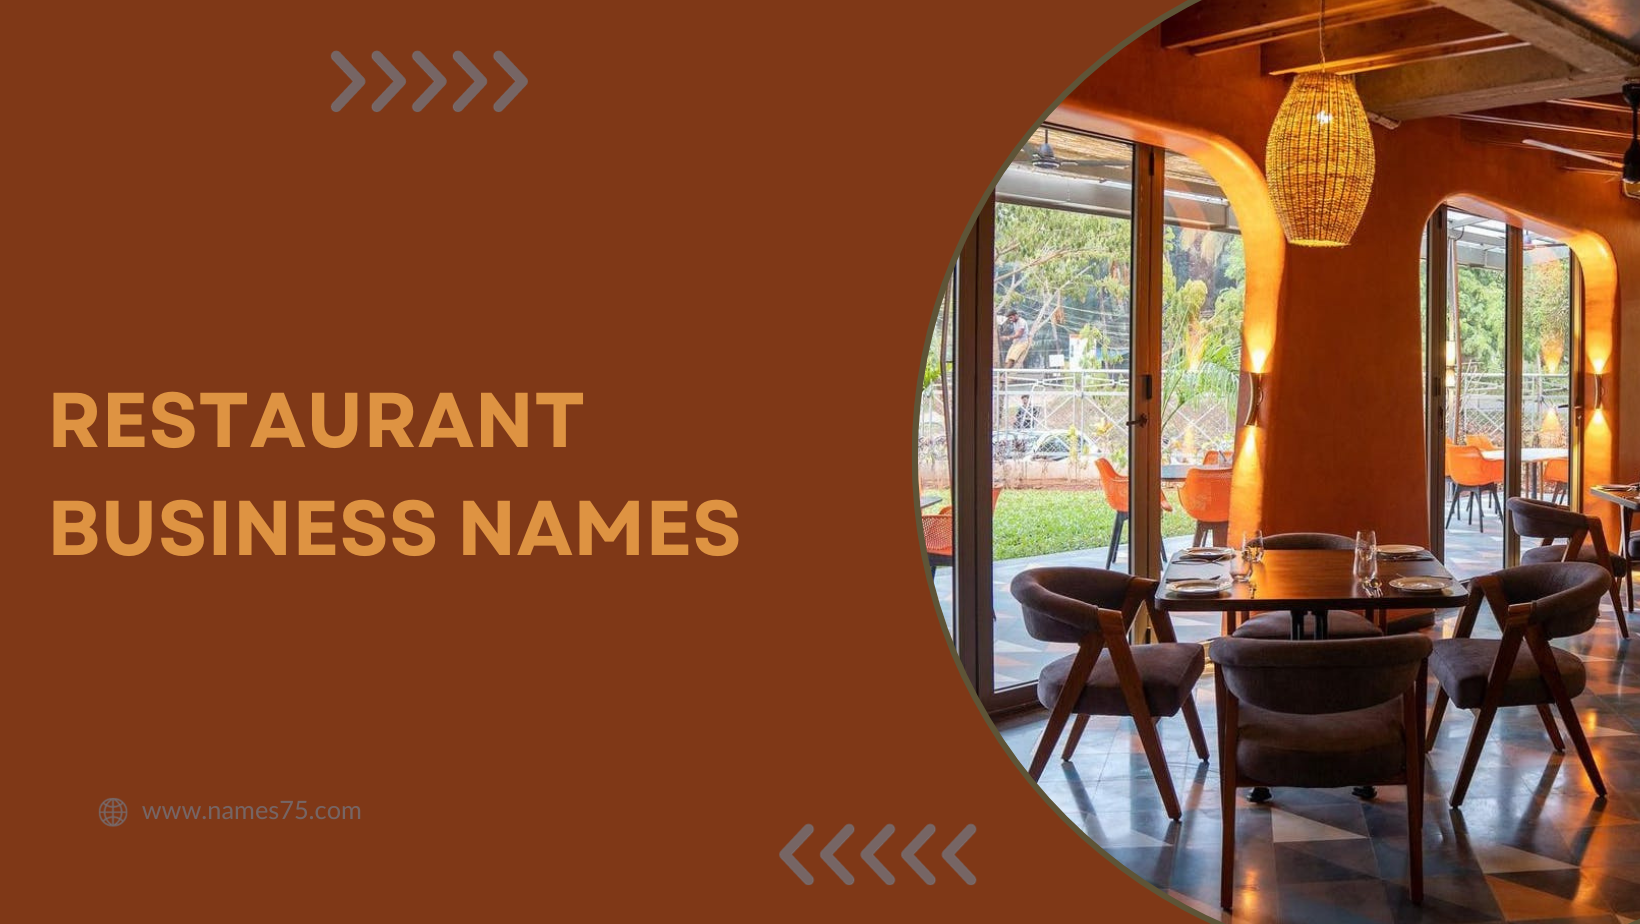 Restaurant Business Names